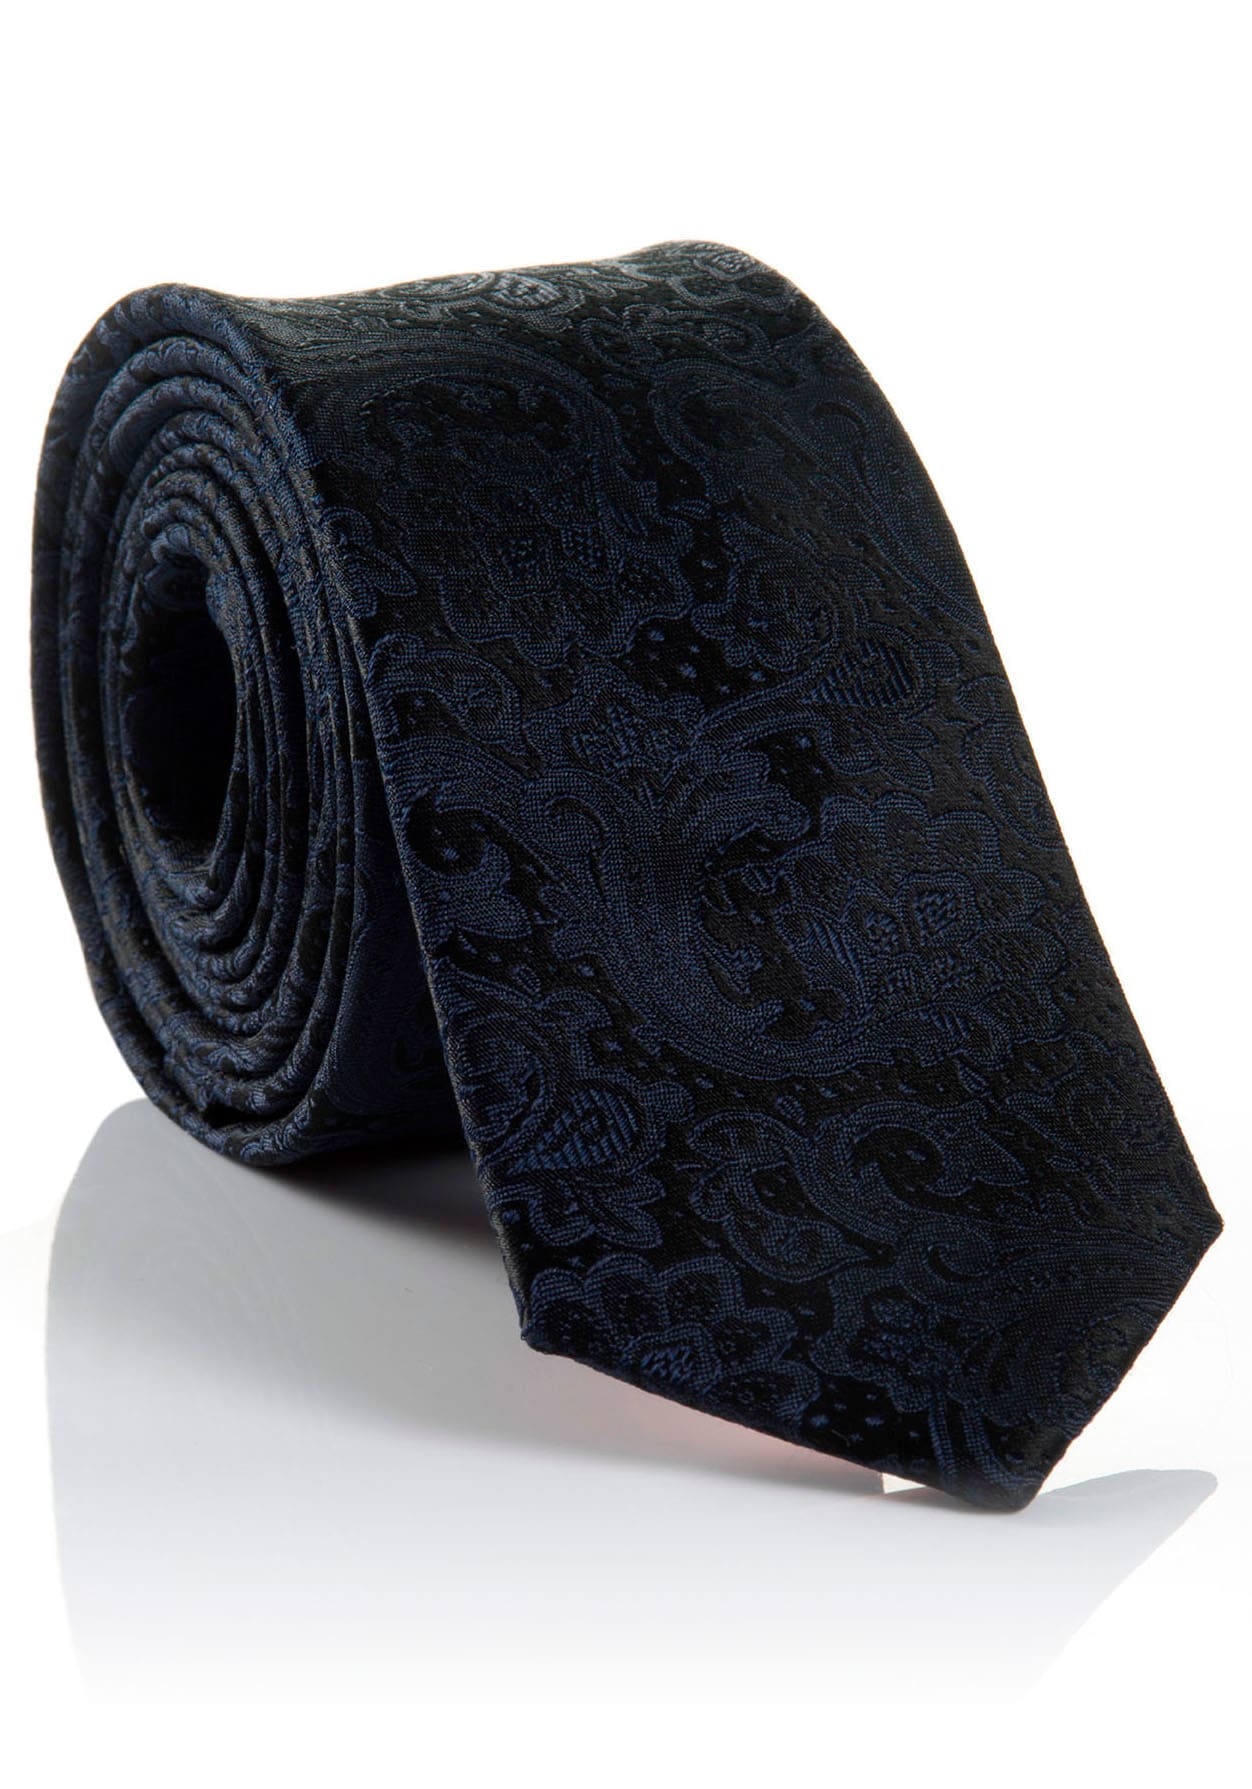 UNIVERSAL reiner bei MONTI Seide, online Krawatte »LUAN«, Paisley-Muster aus